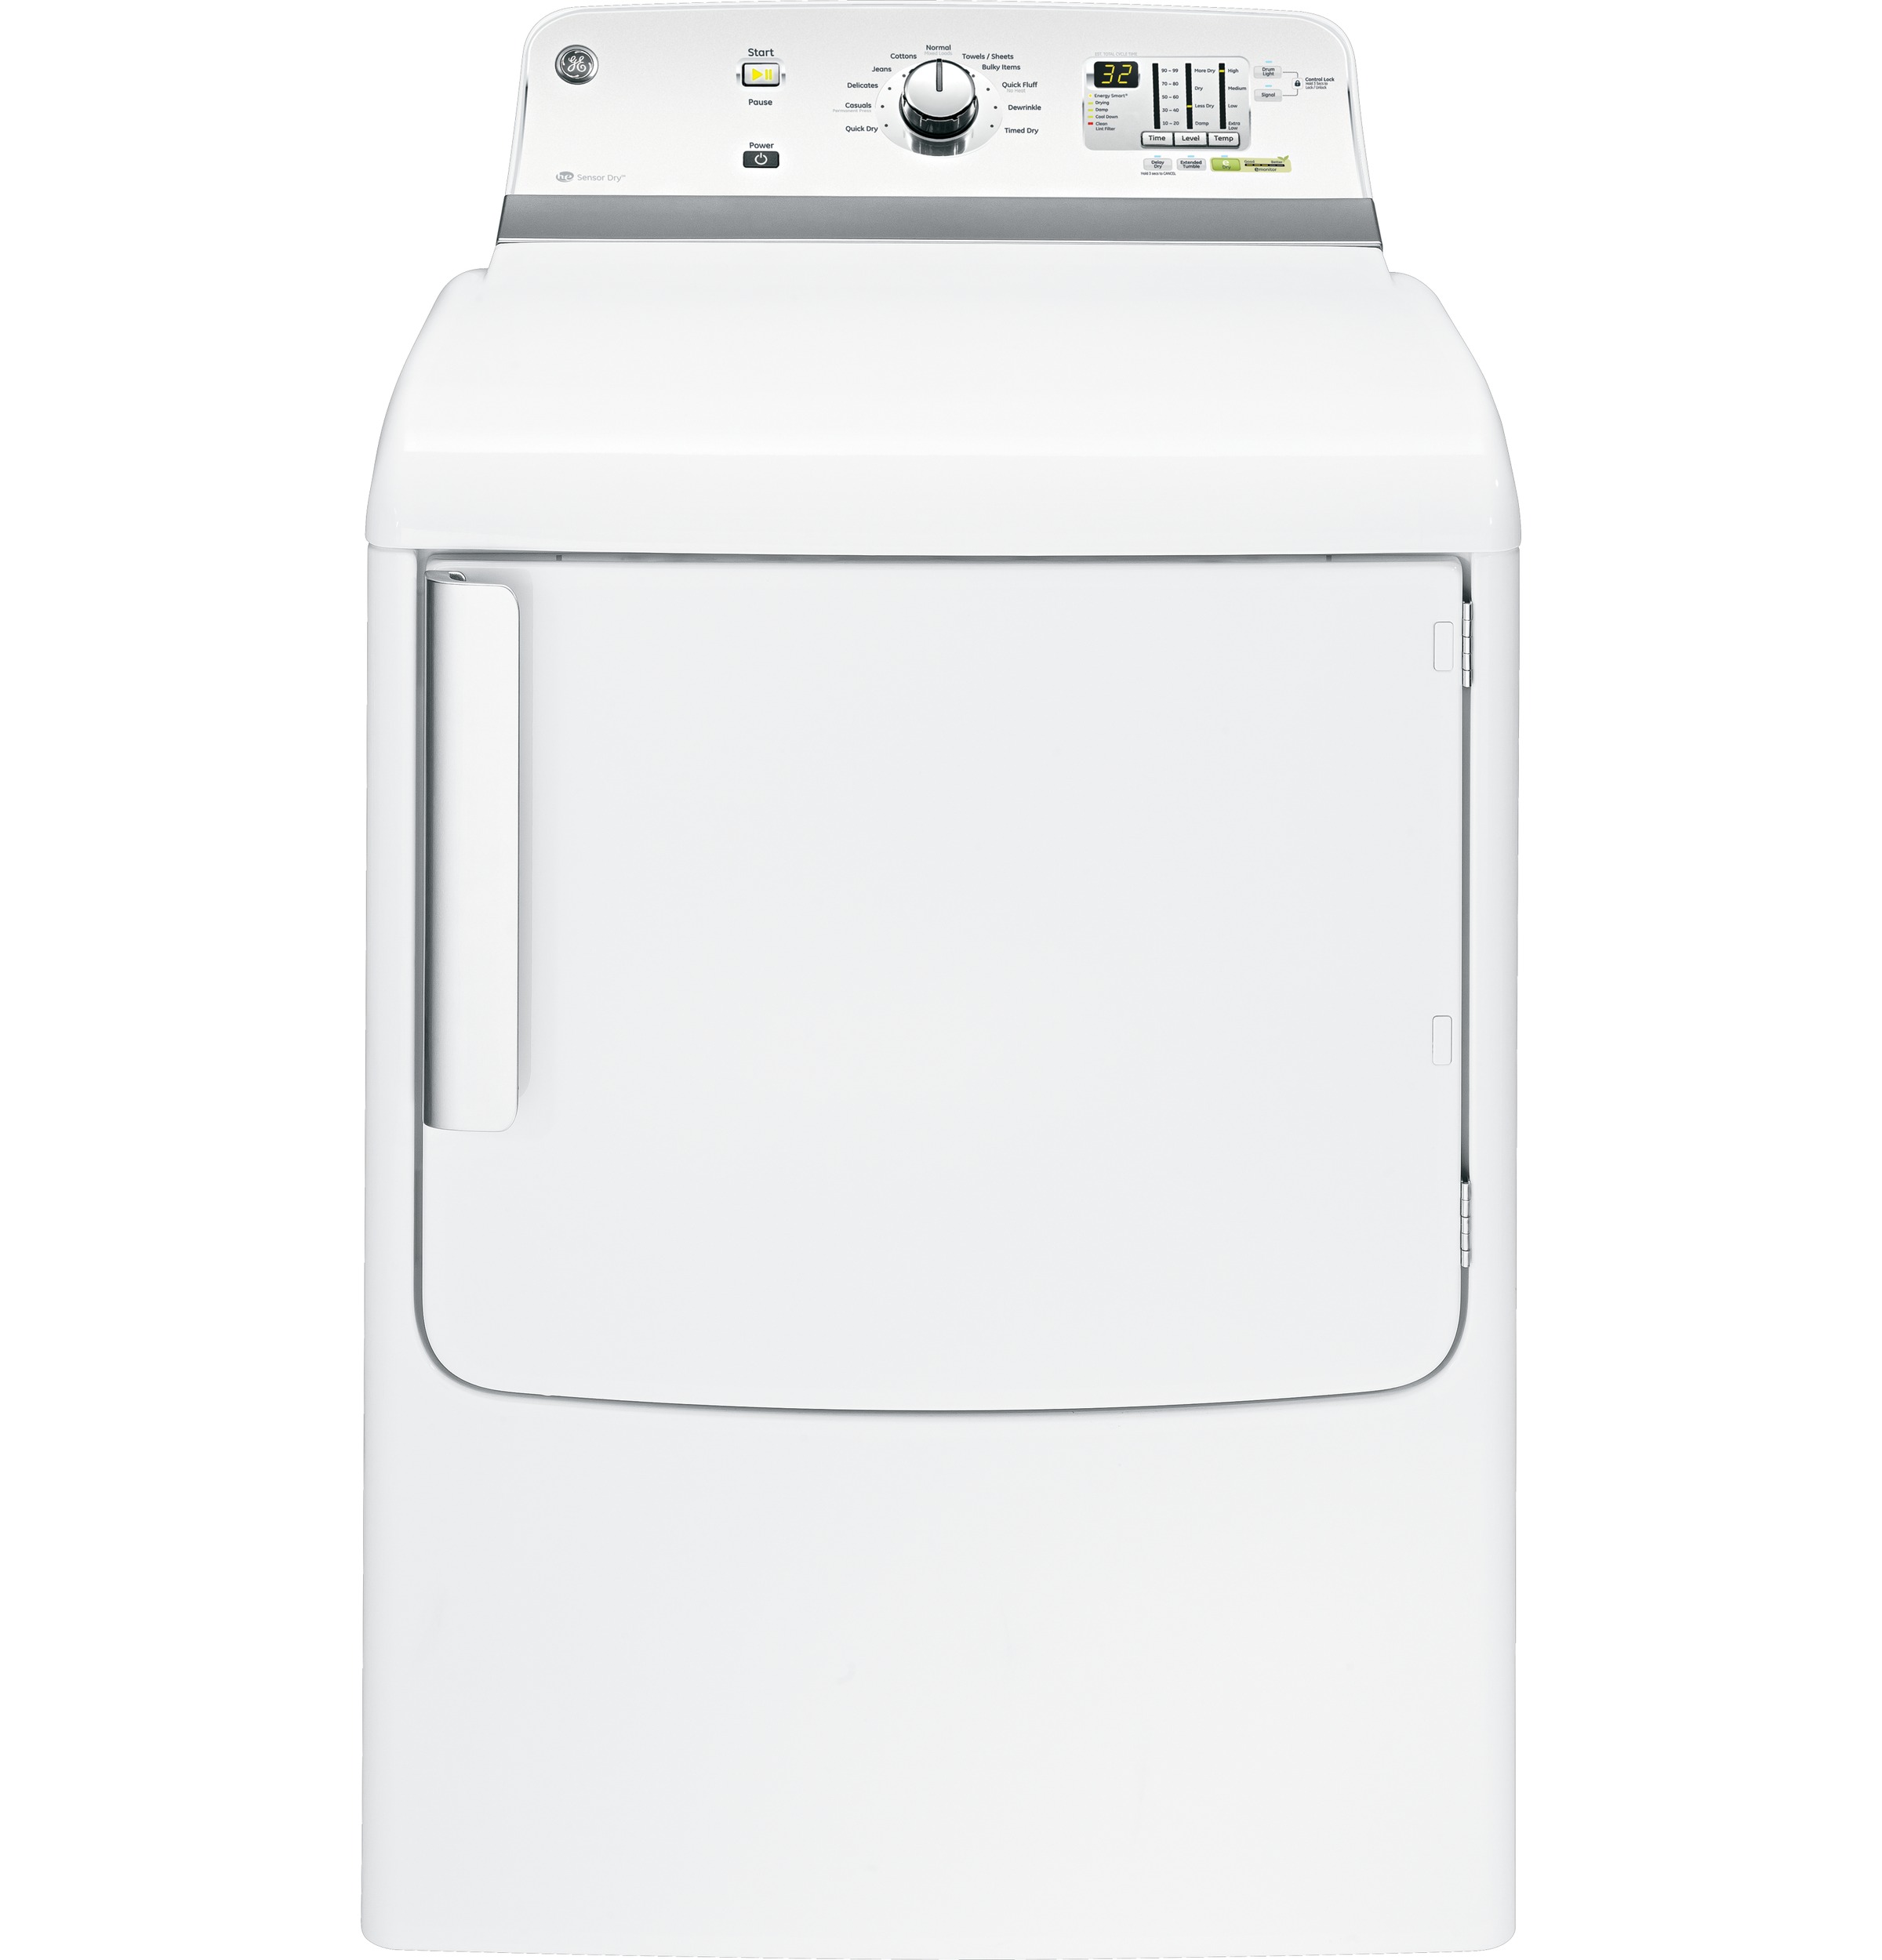 GE® 7.8 cu. ft. capacity gas dryer